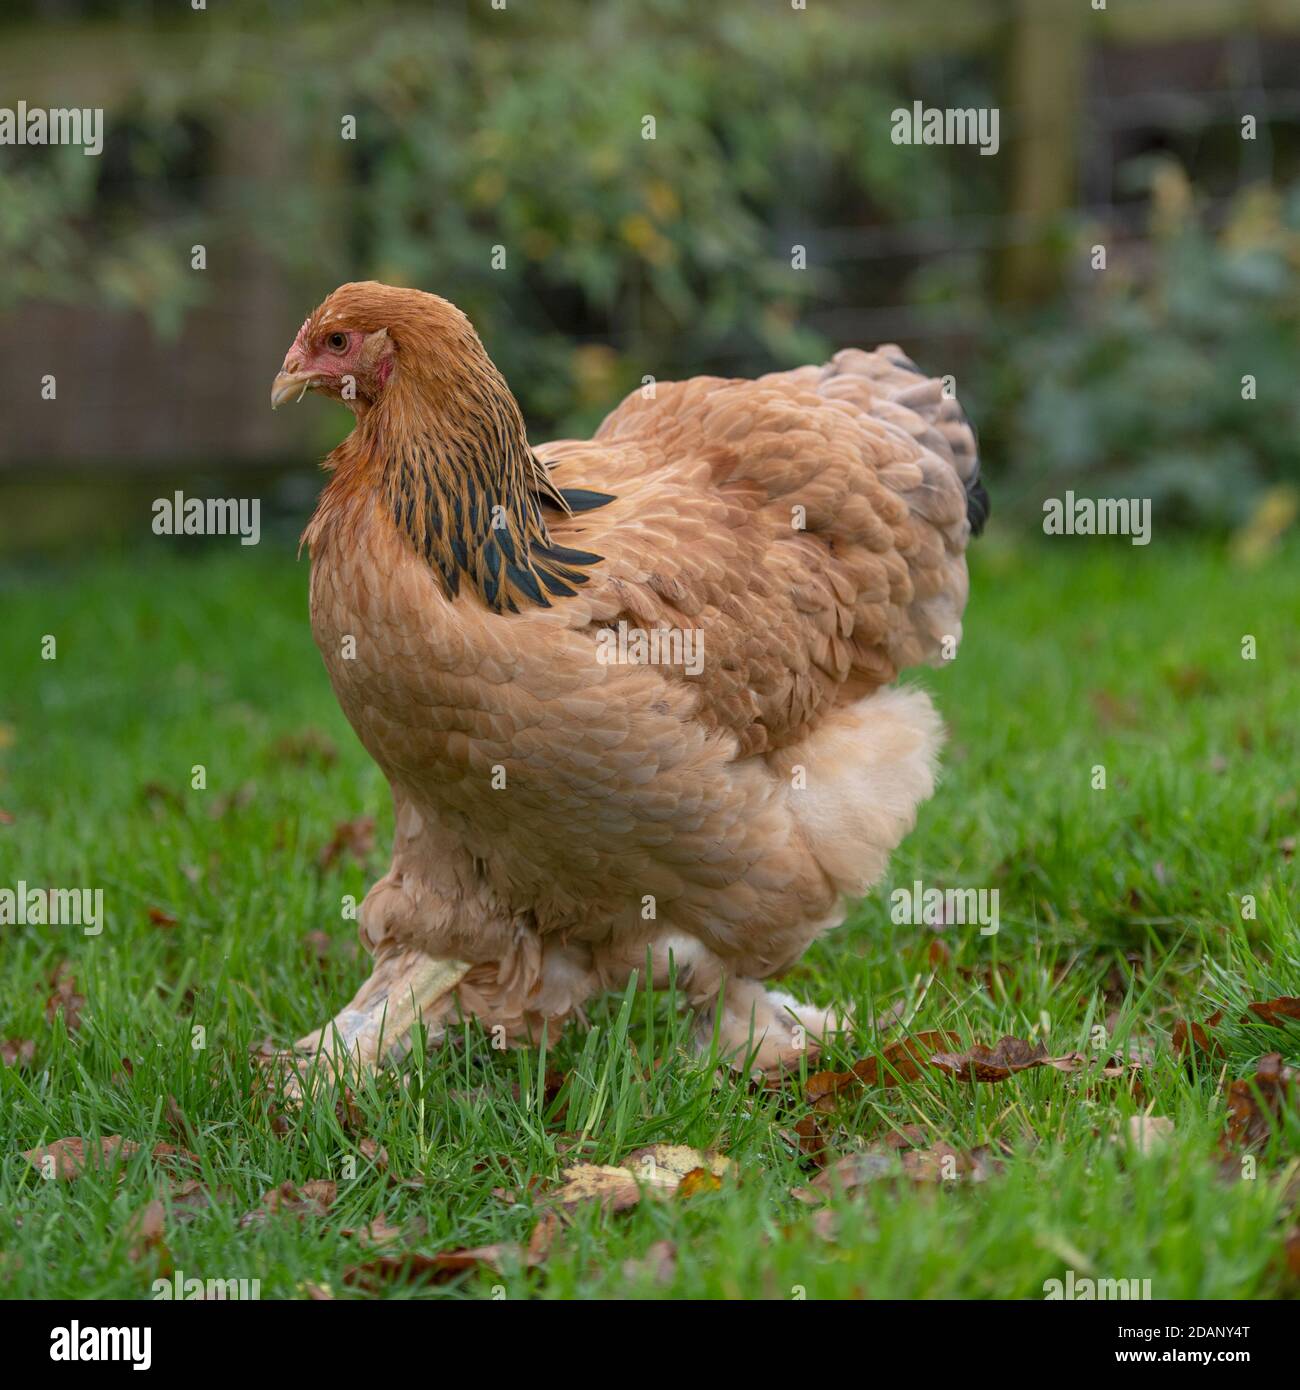 Brahma chicken Stock Photo